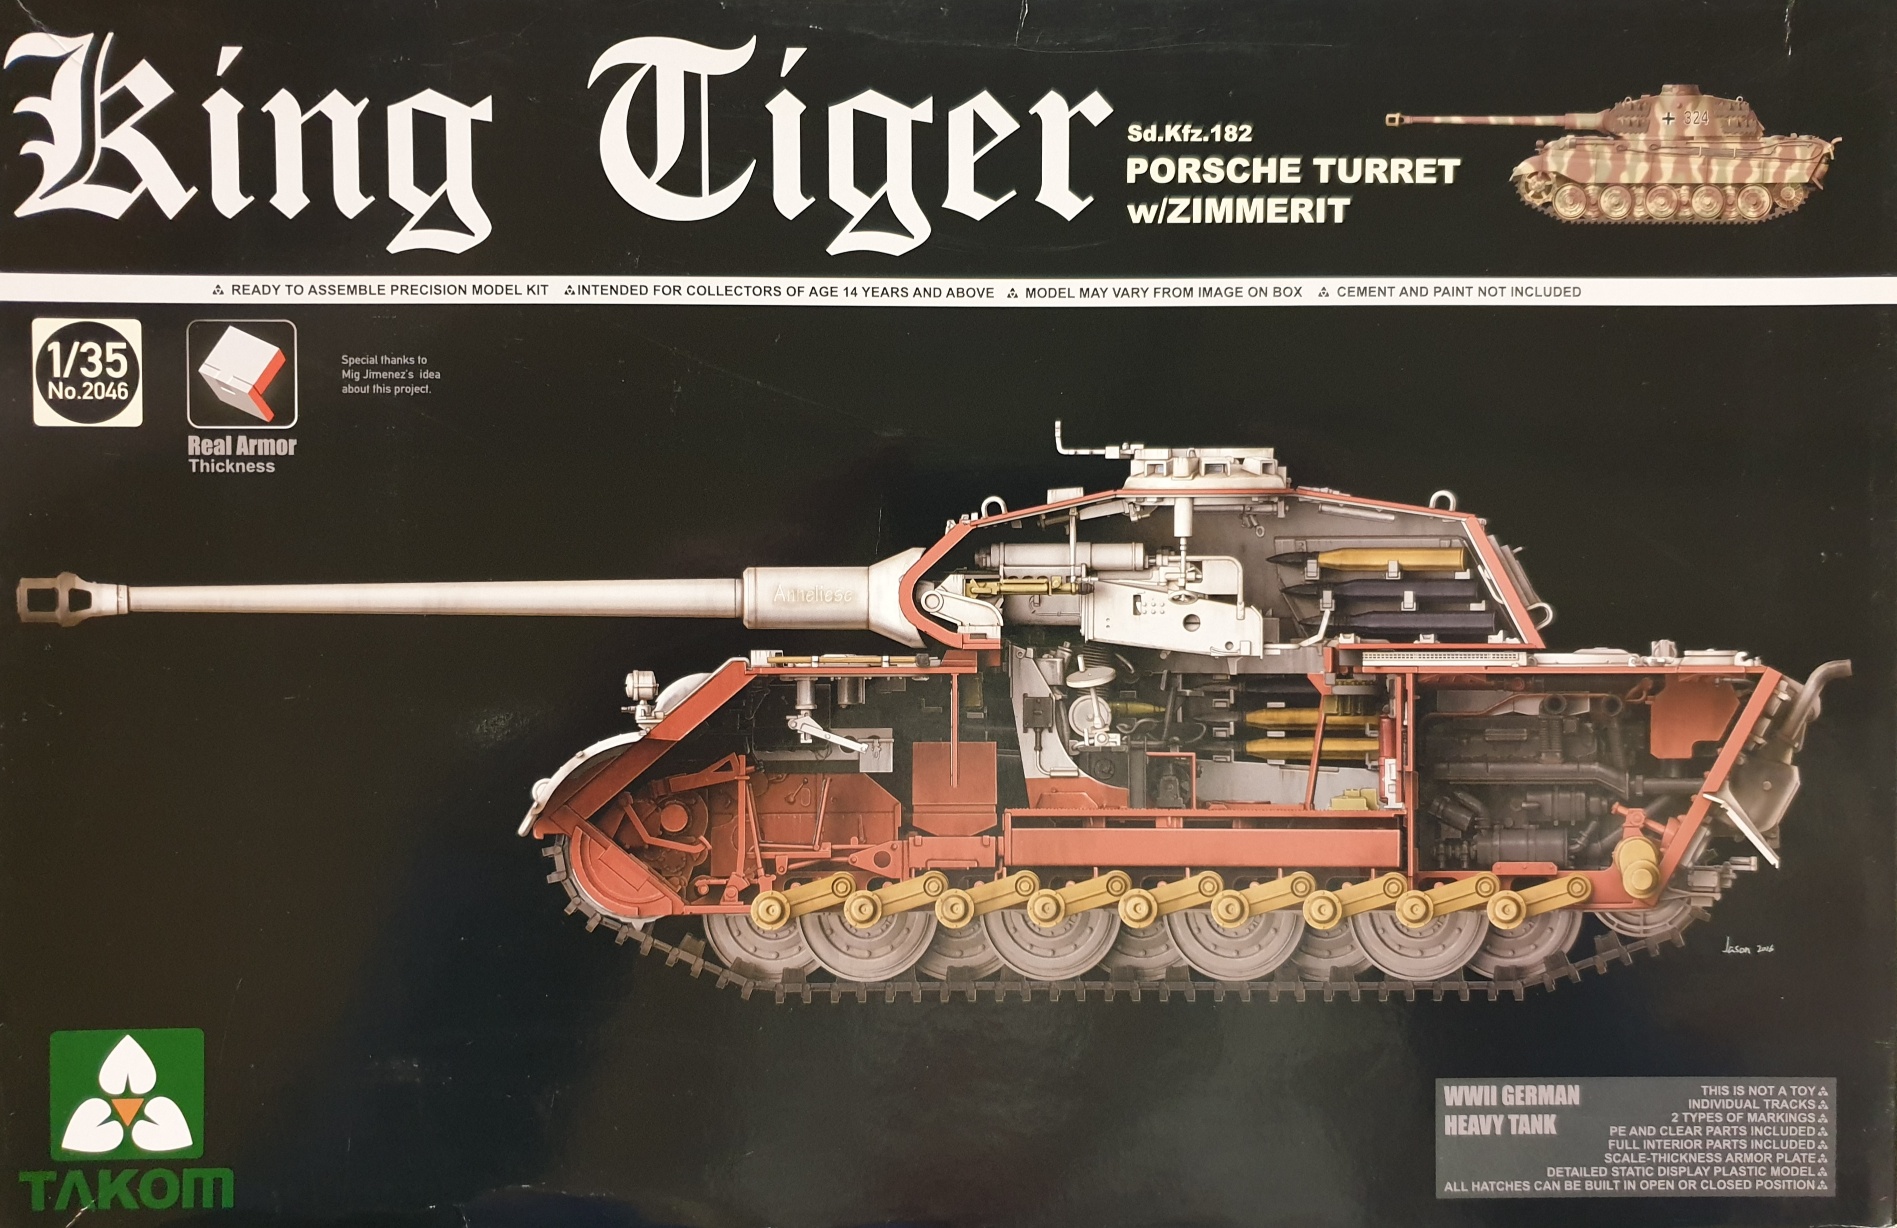 2046  техника и вооружение  King Tiger Sd.Kfz.182 PORSCHE TURRET w/ZIMMERIT  (1:35)